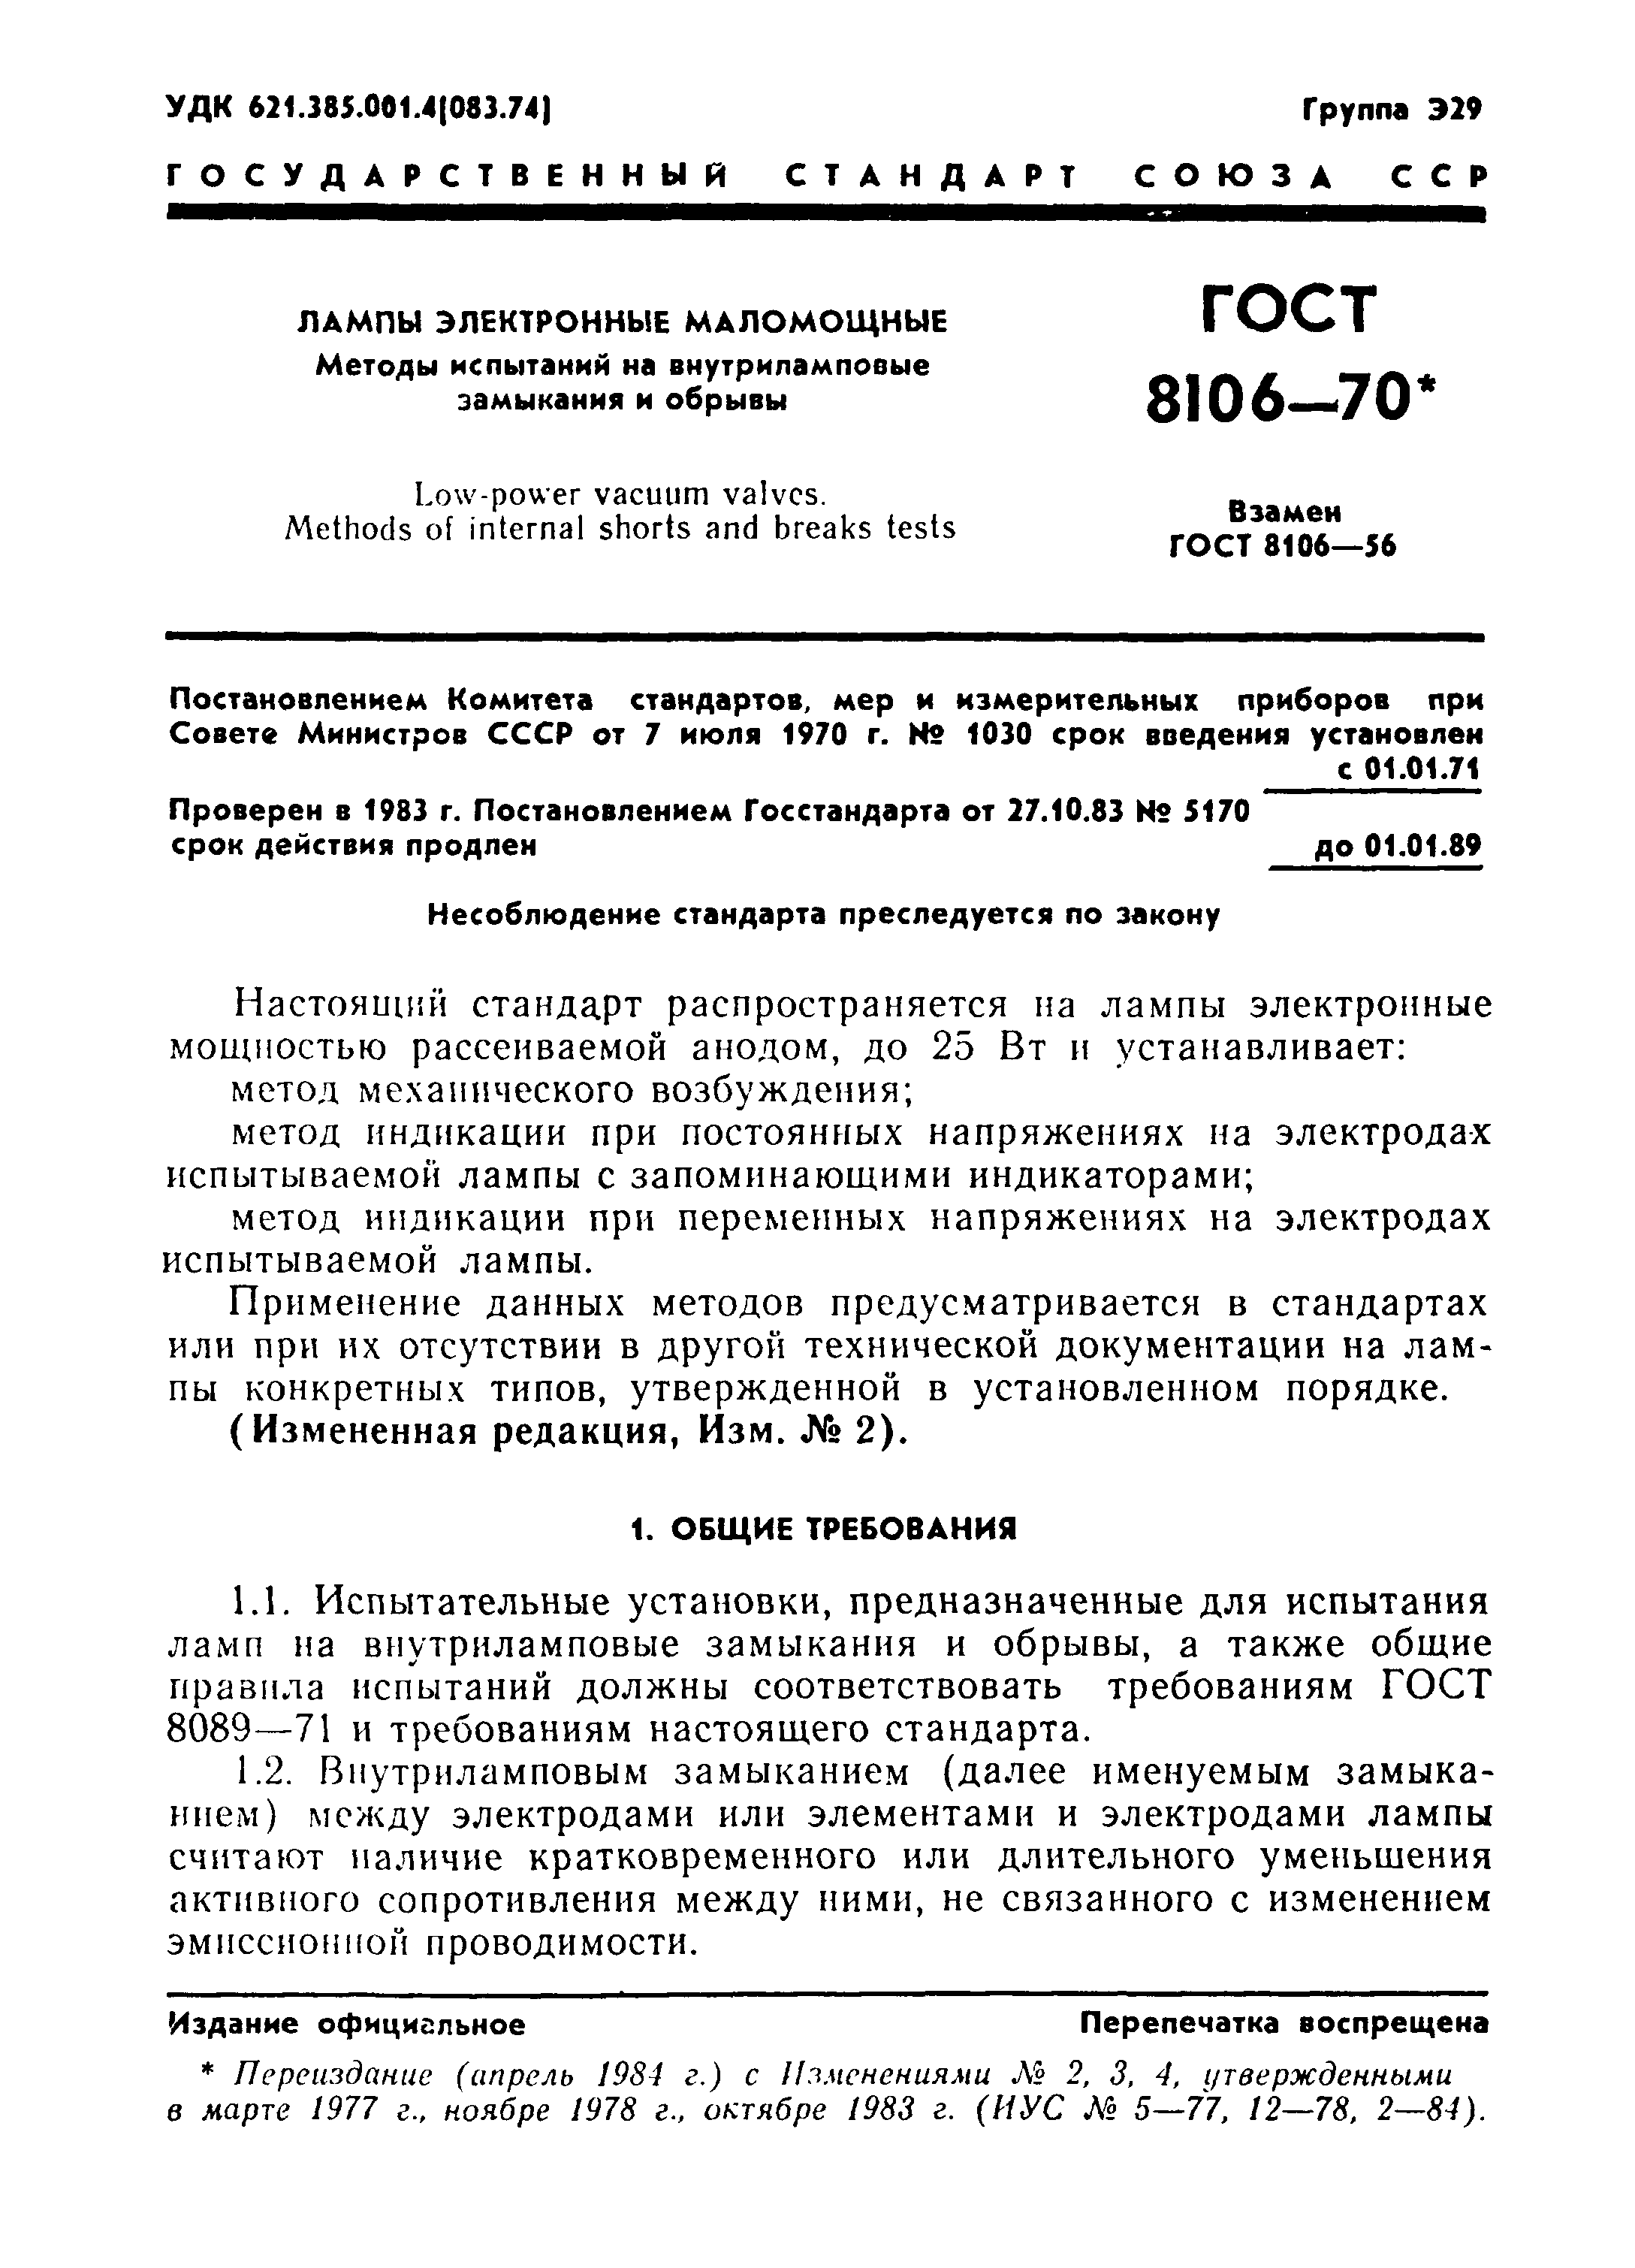 ГОСТ 8106-70